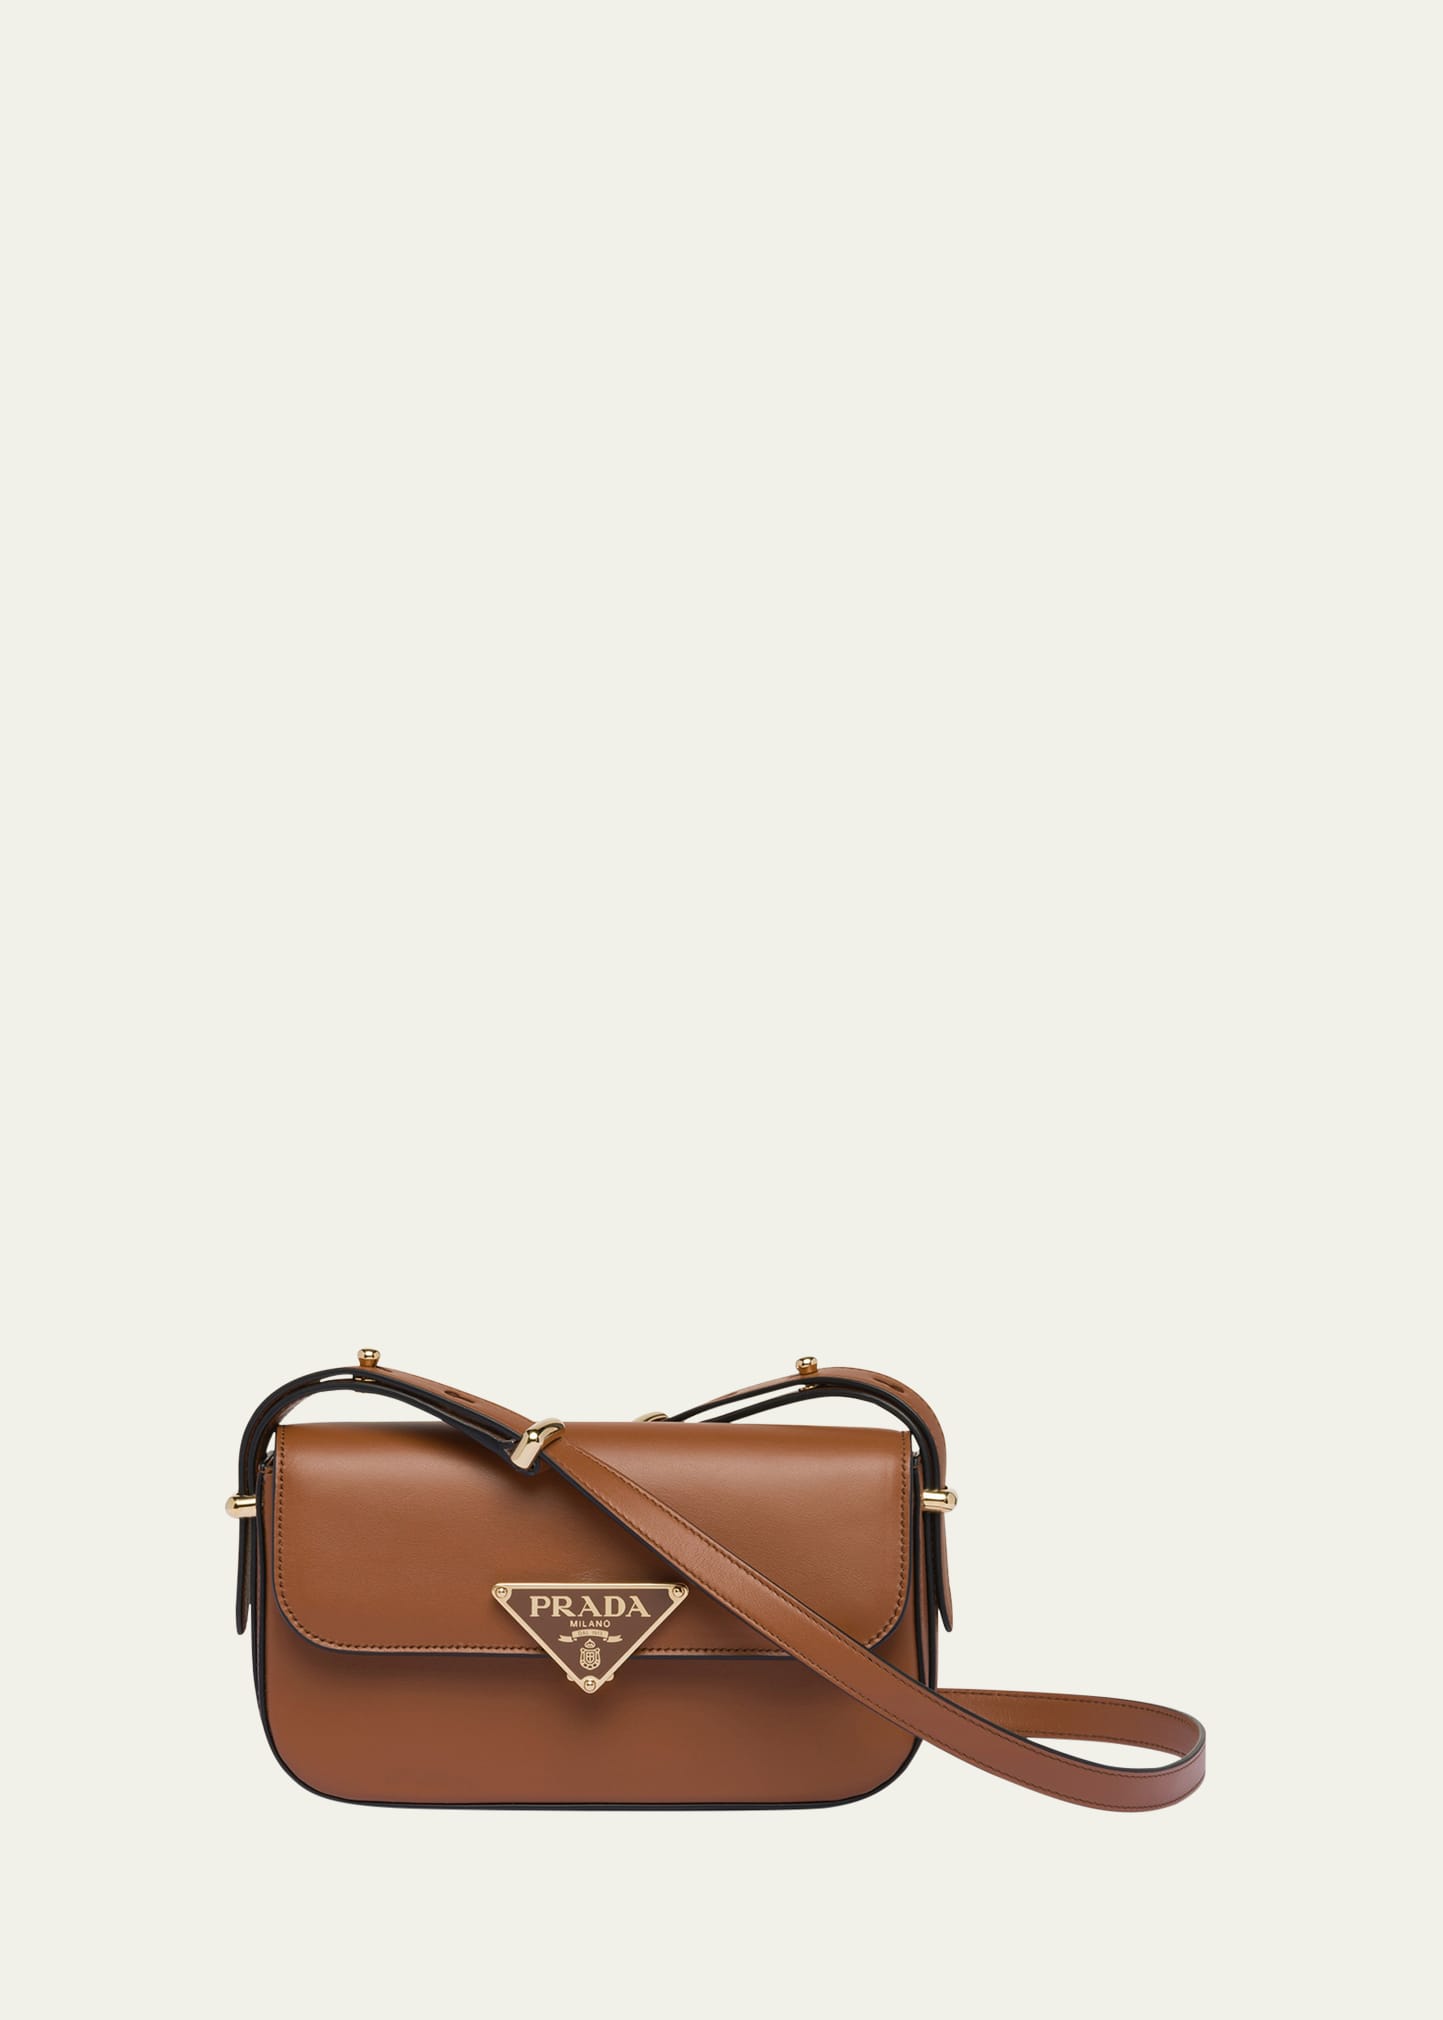 Prada Triangle Flap Leather Shoulder Bag In F0xug Cognac N